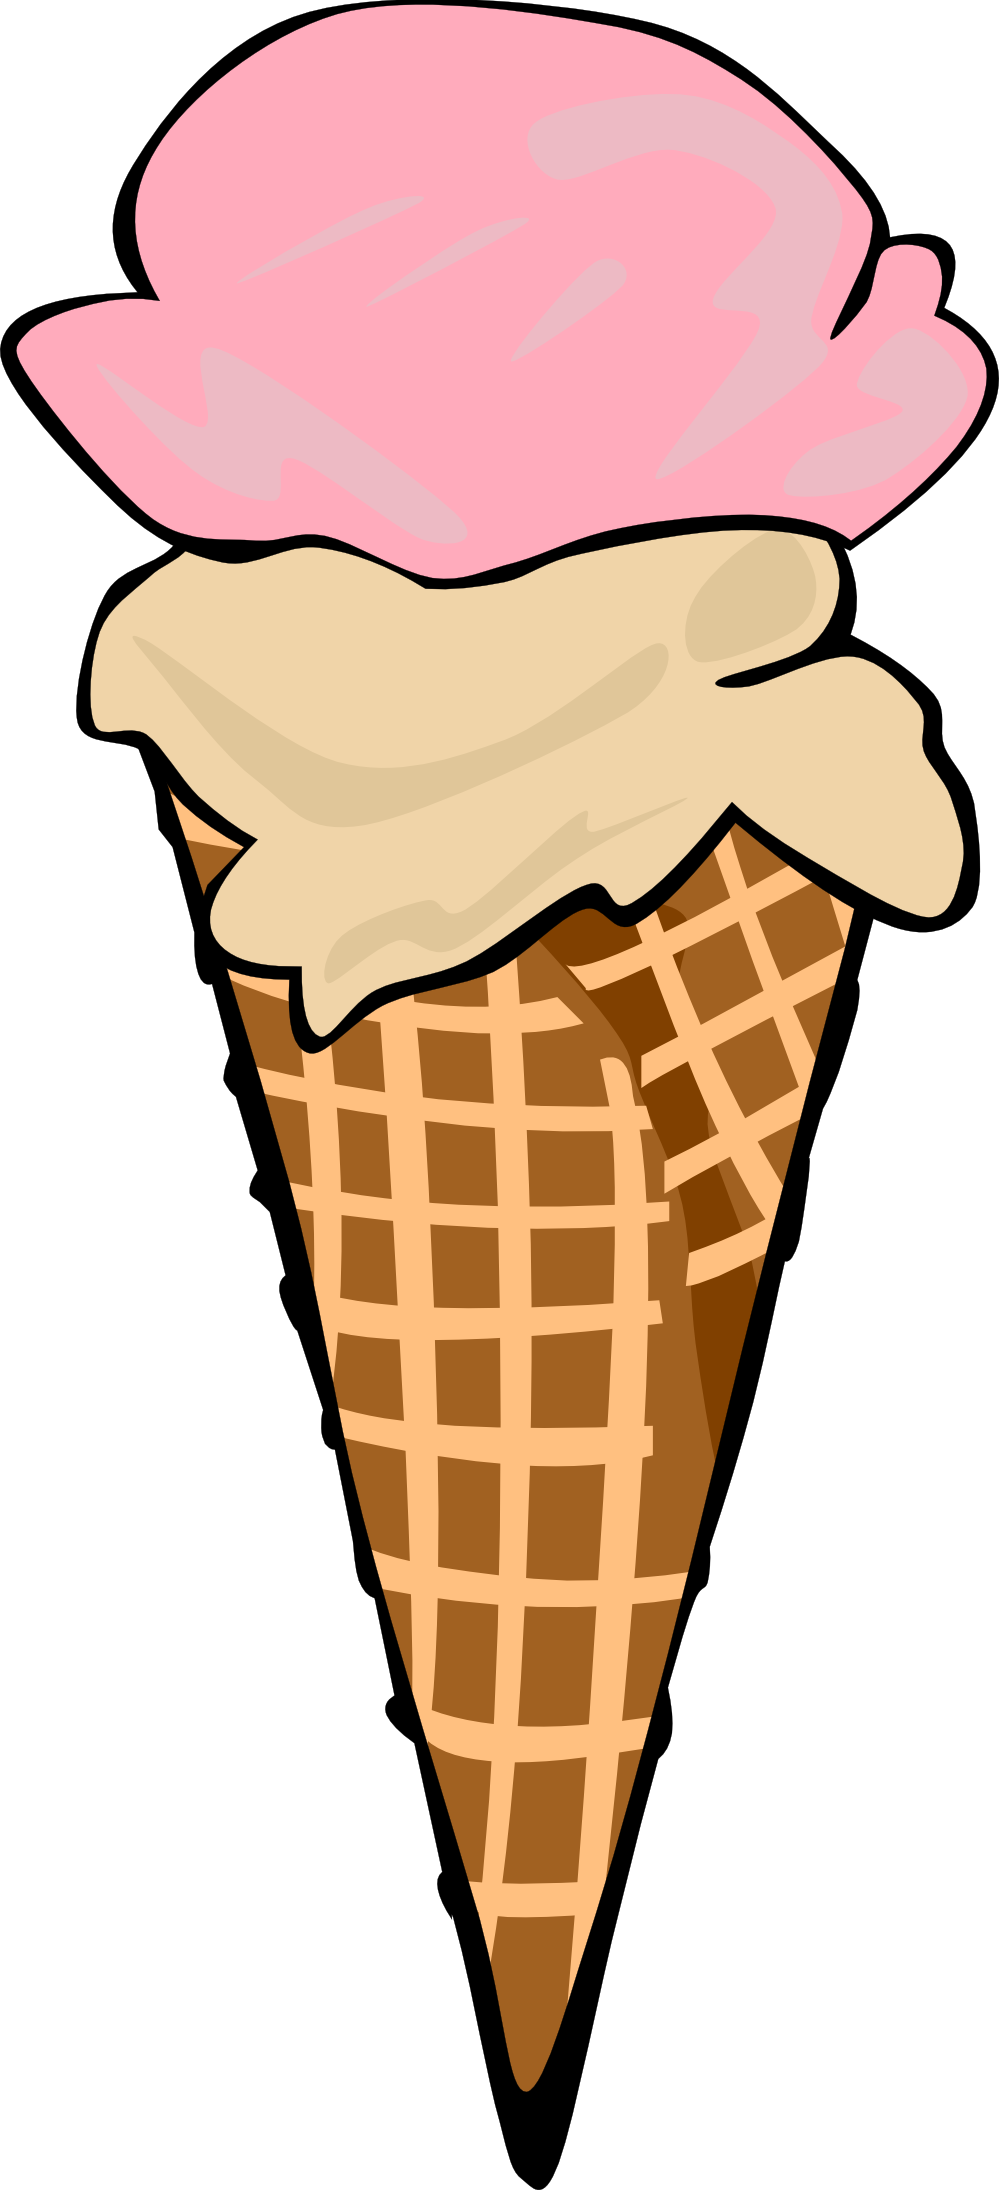 Free Picture Of A Ice Cream Cone, Download Free Clip Art ...